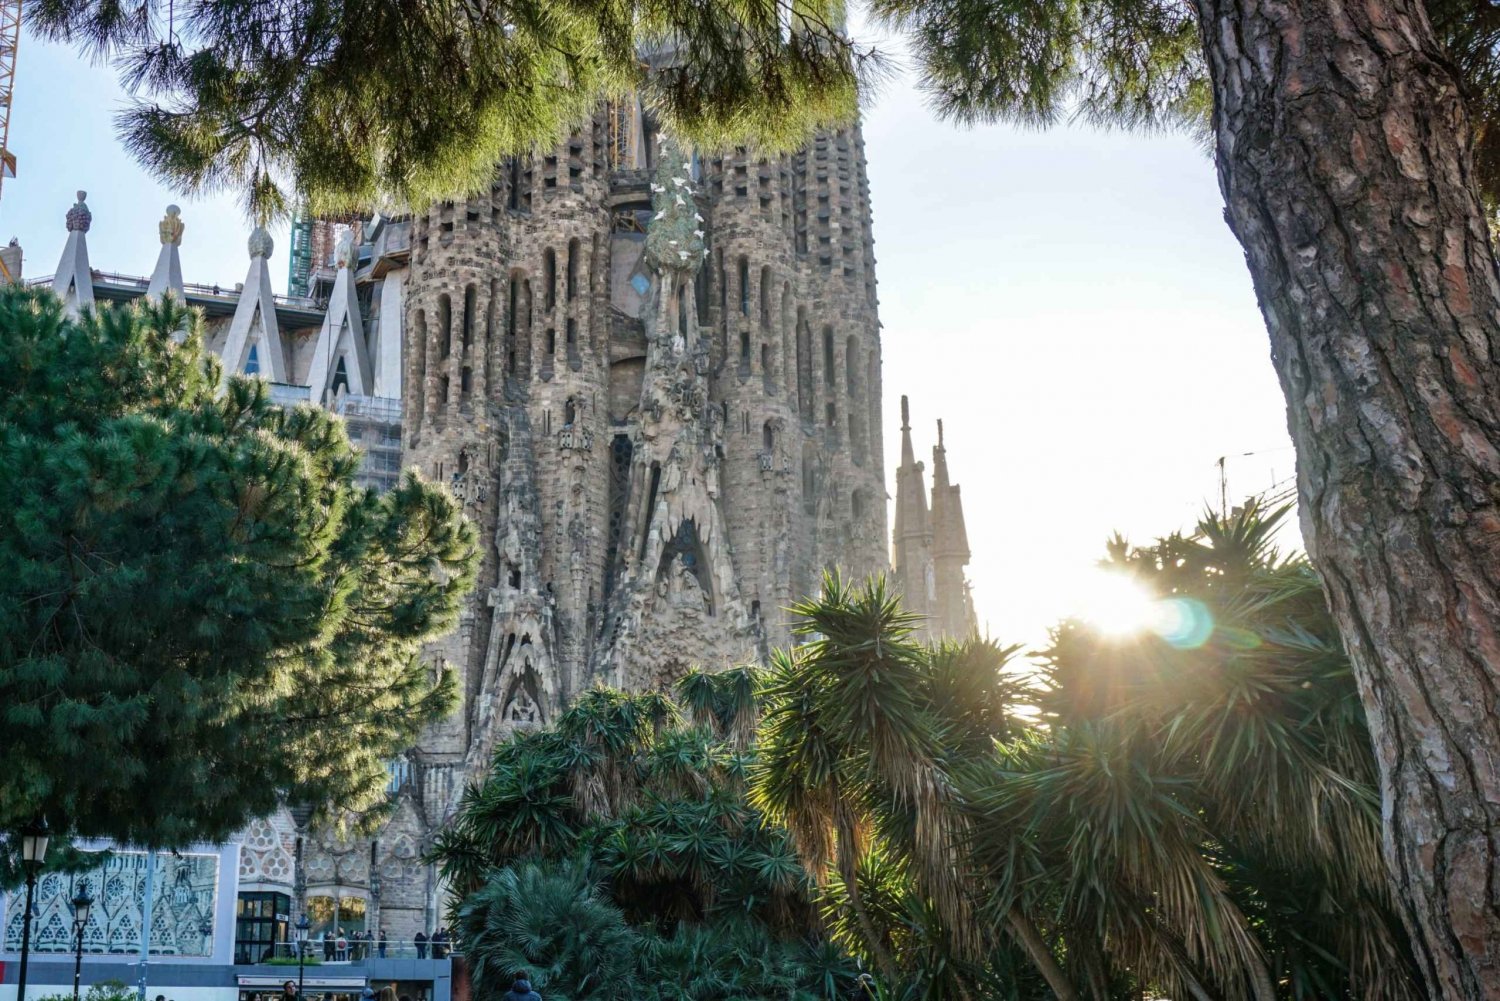 La-Sagrada-Familia-Gaudis-Unfinished-Masterpiece